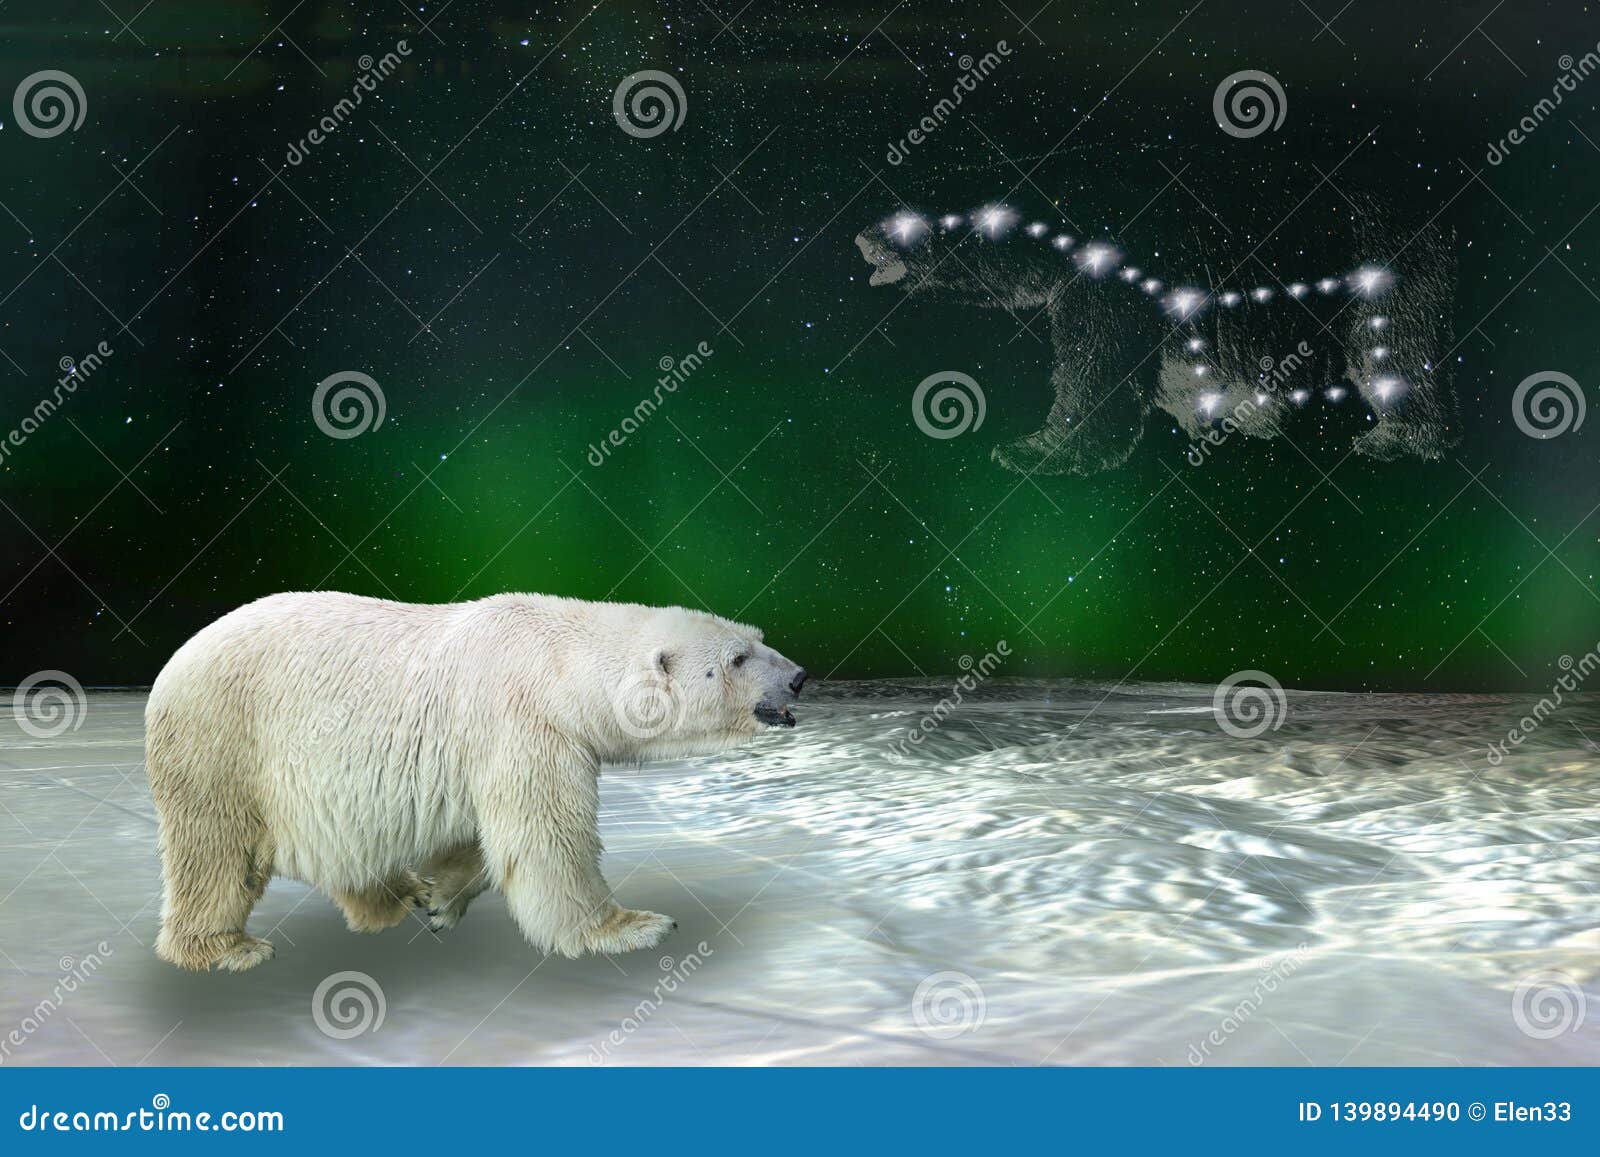 polar bear and ursa major great bear constellation